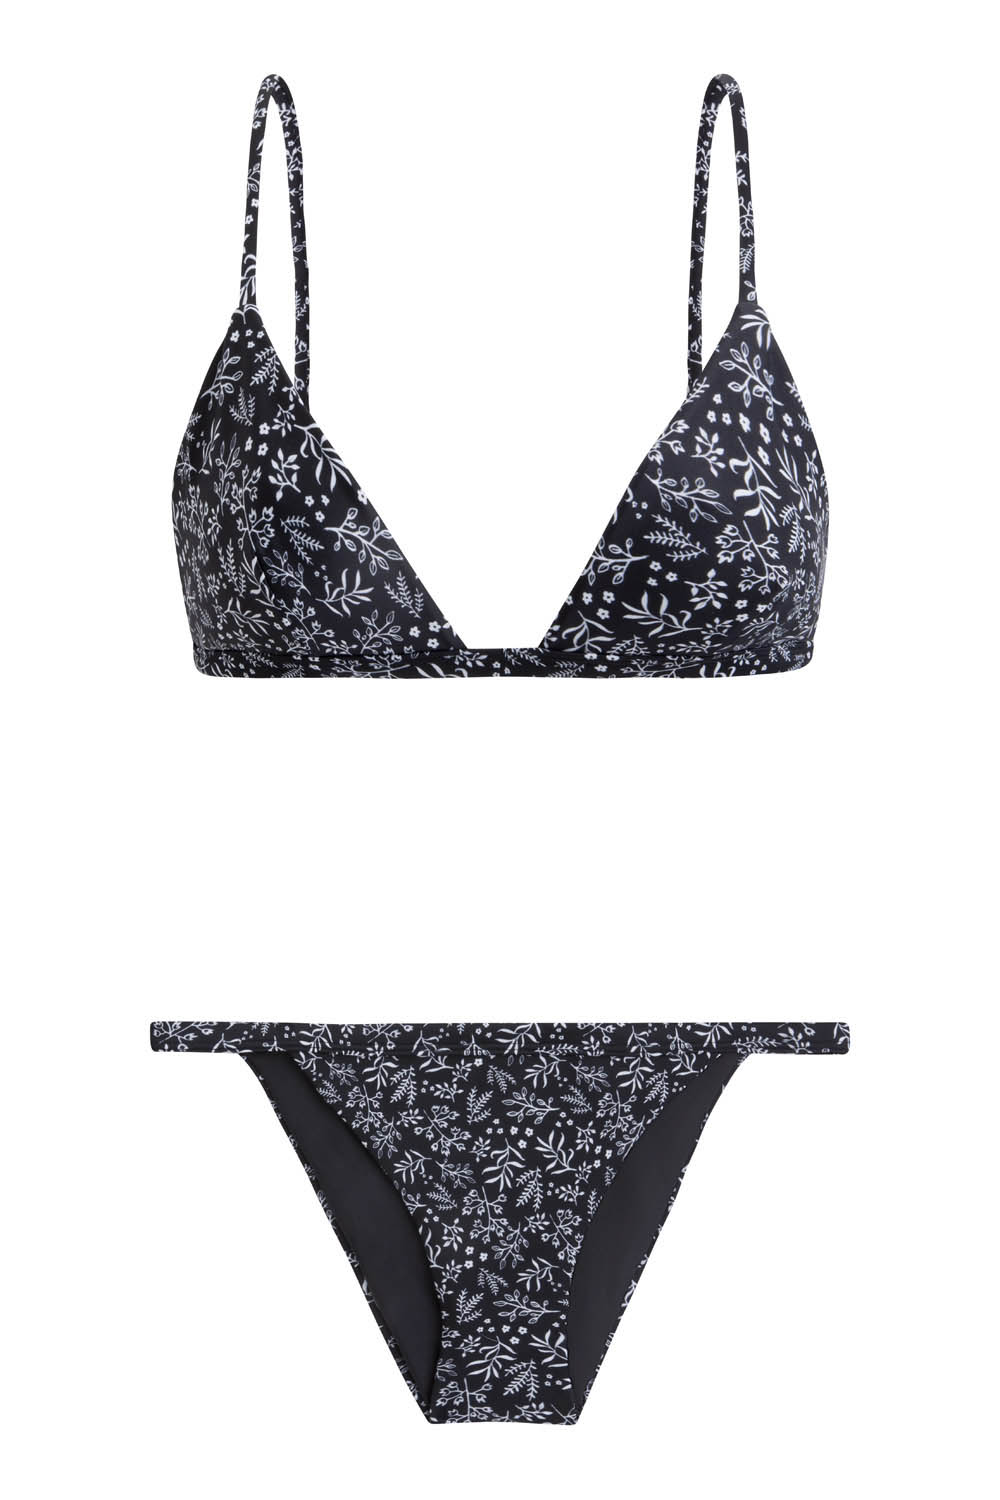 Sustainable Luxury Swimwear / Ropa de baño sostenible, eco bikini / bikini ecológico. Ilo Ilo bikini in anemone black, by NOW_THEN